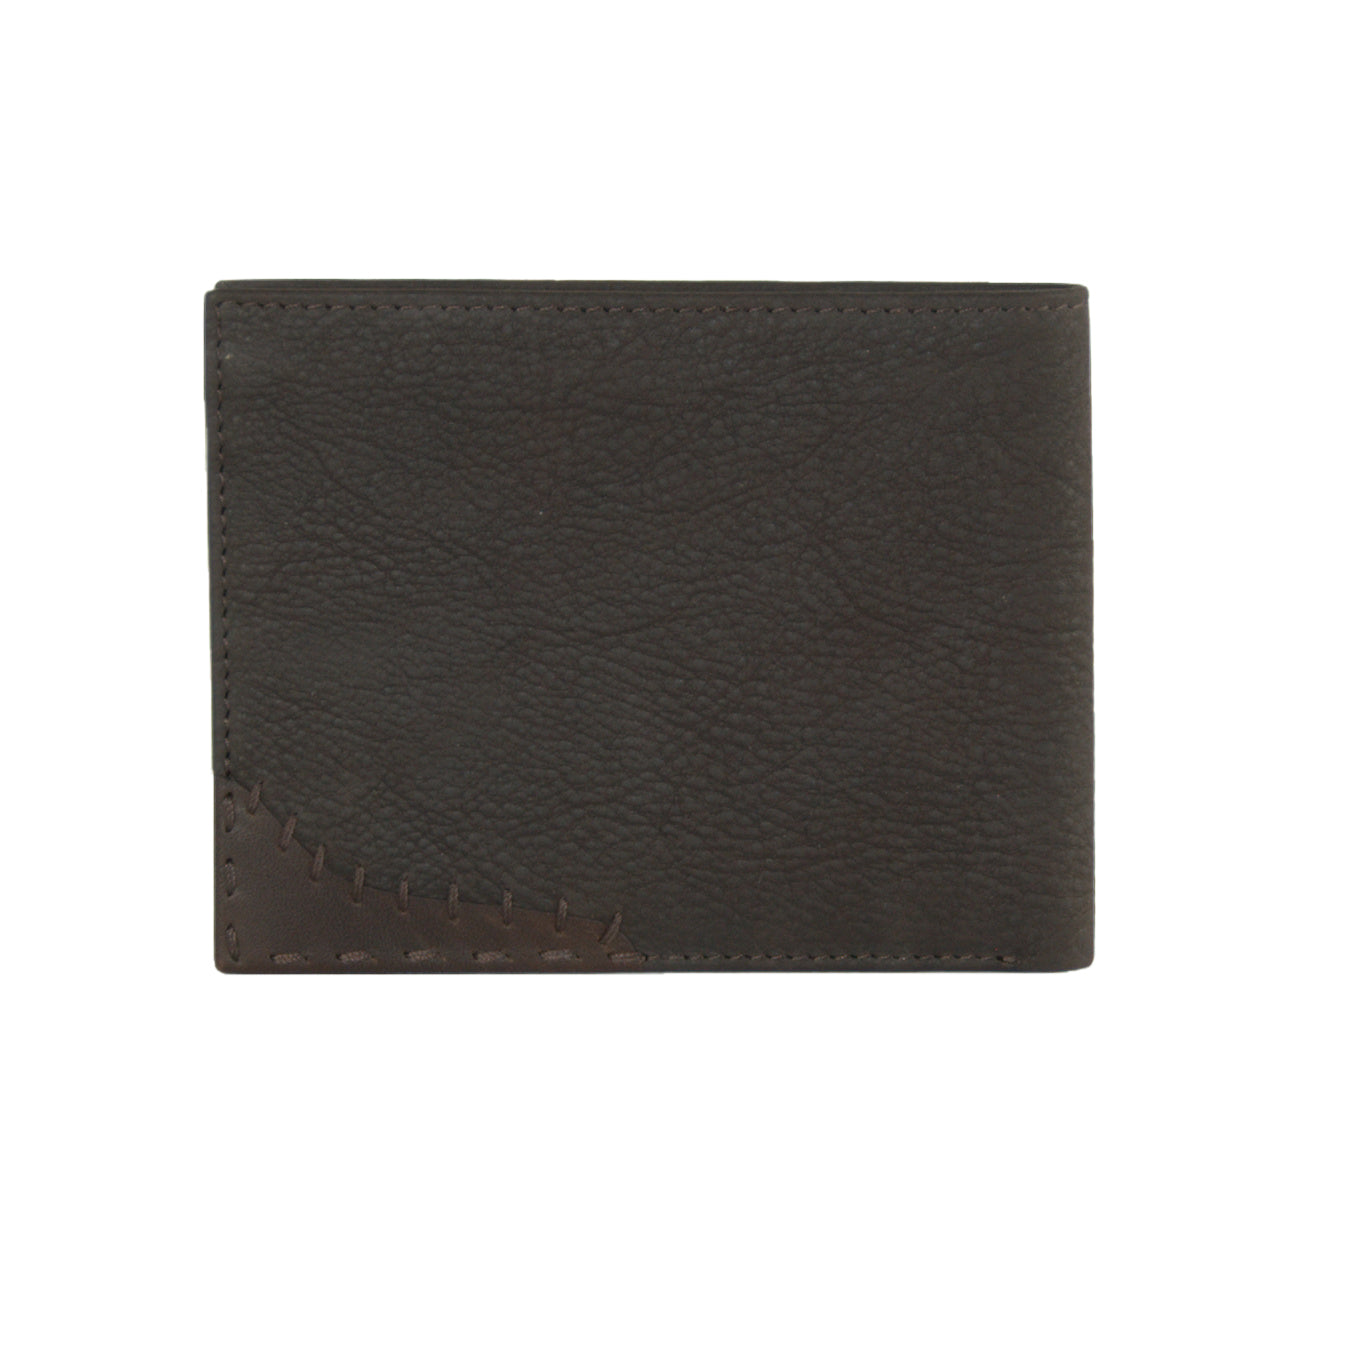 La Martina Brown Leather Wallet